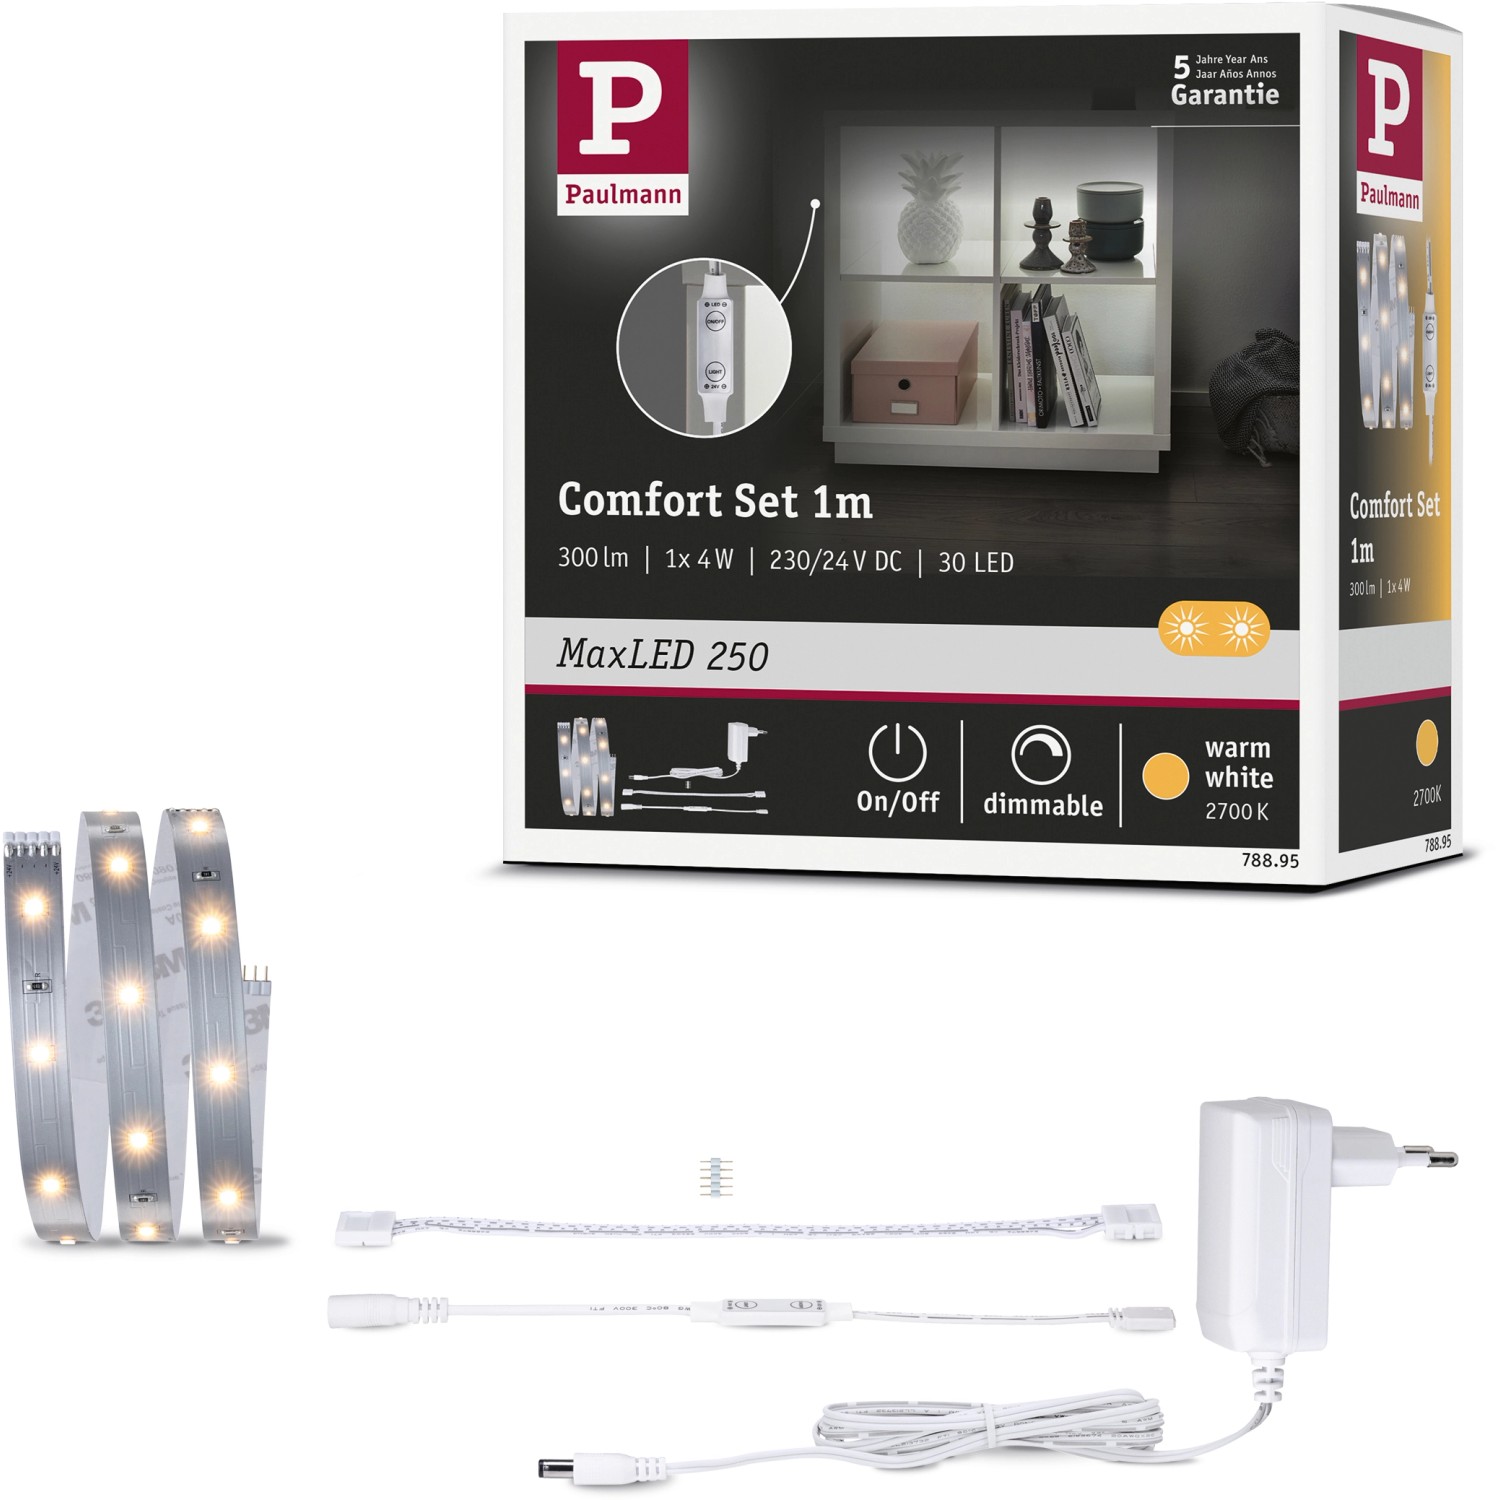 Komfort LED bei 1 Paulmann m Regal 250 Basis-Set OBI kaufen Weiß Strip MaxLED